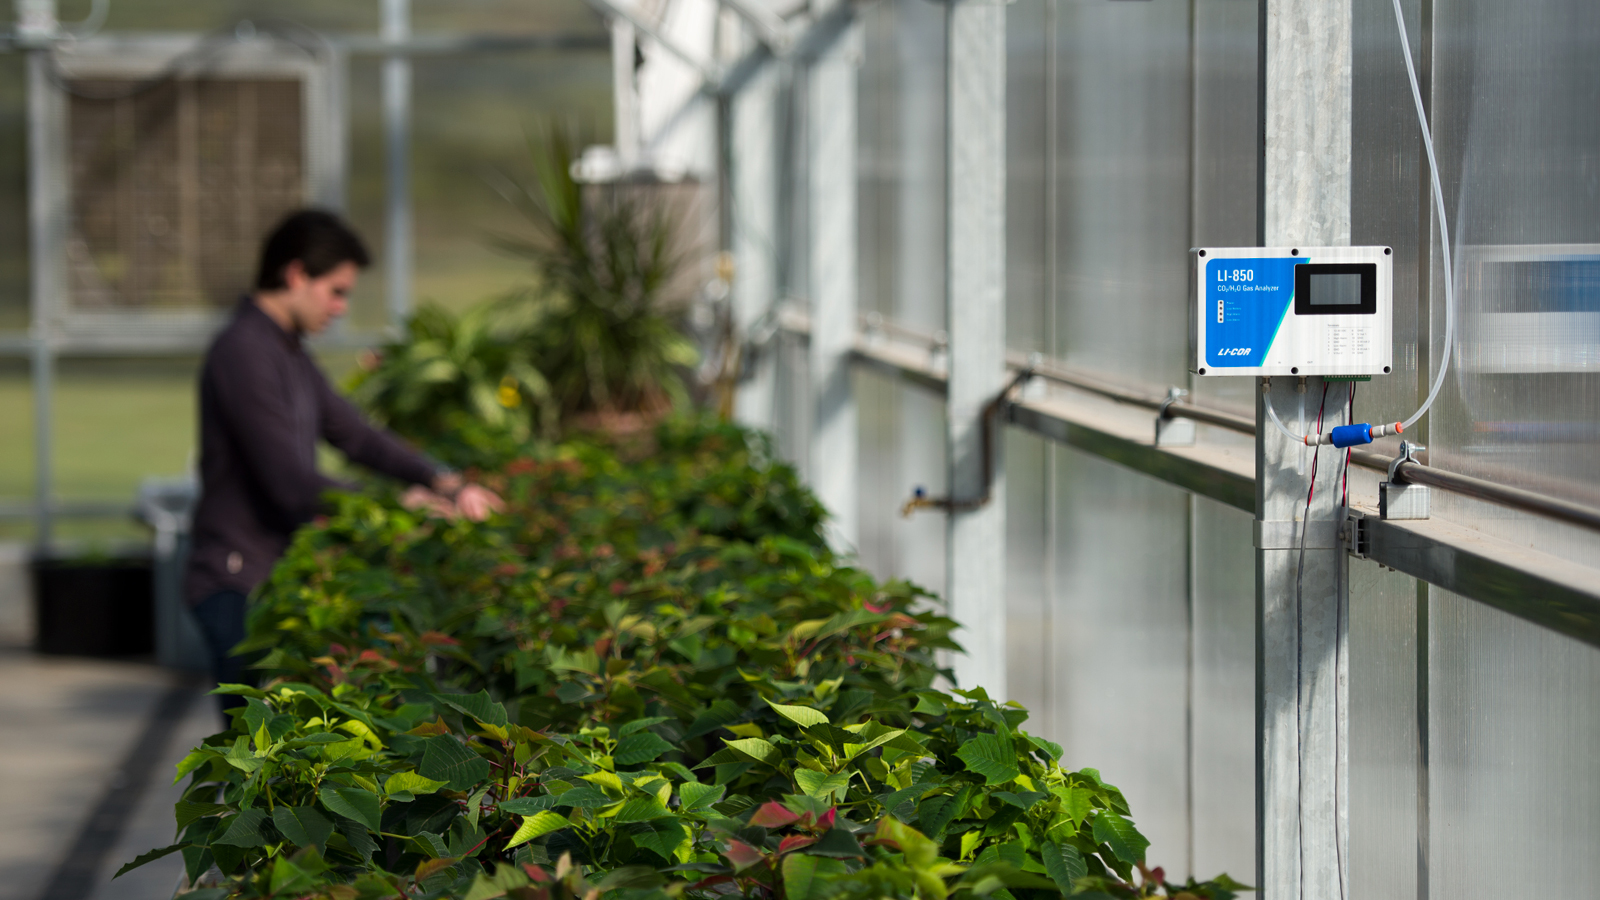 LI-850 in greenhouse